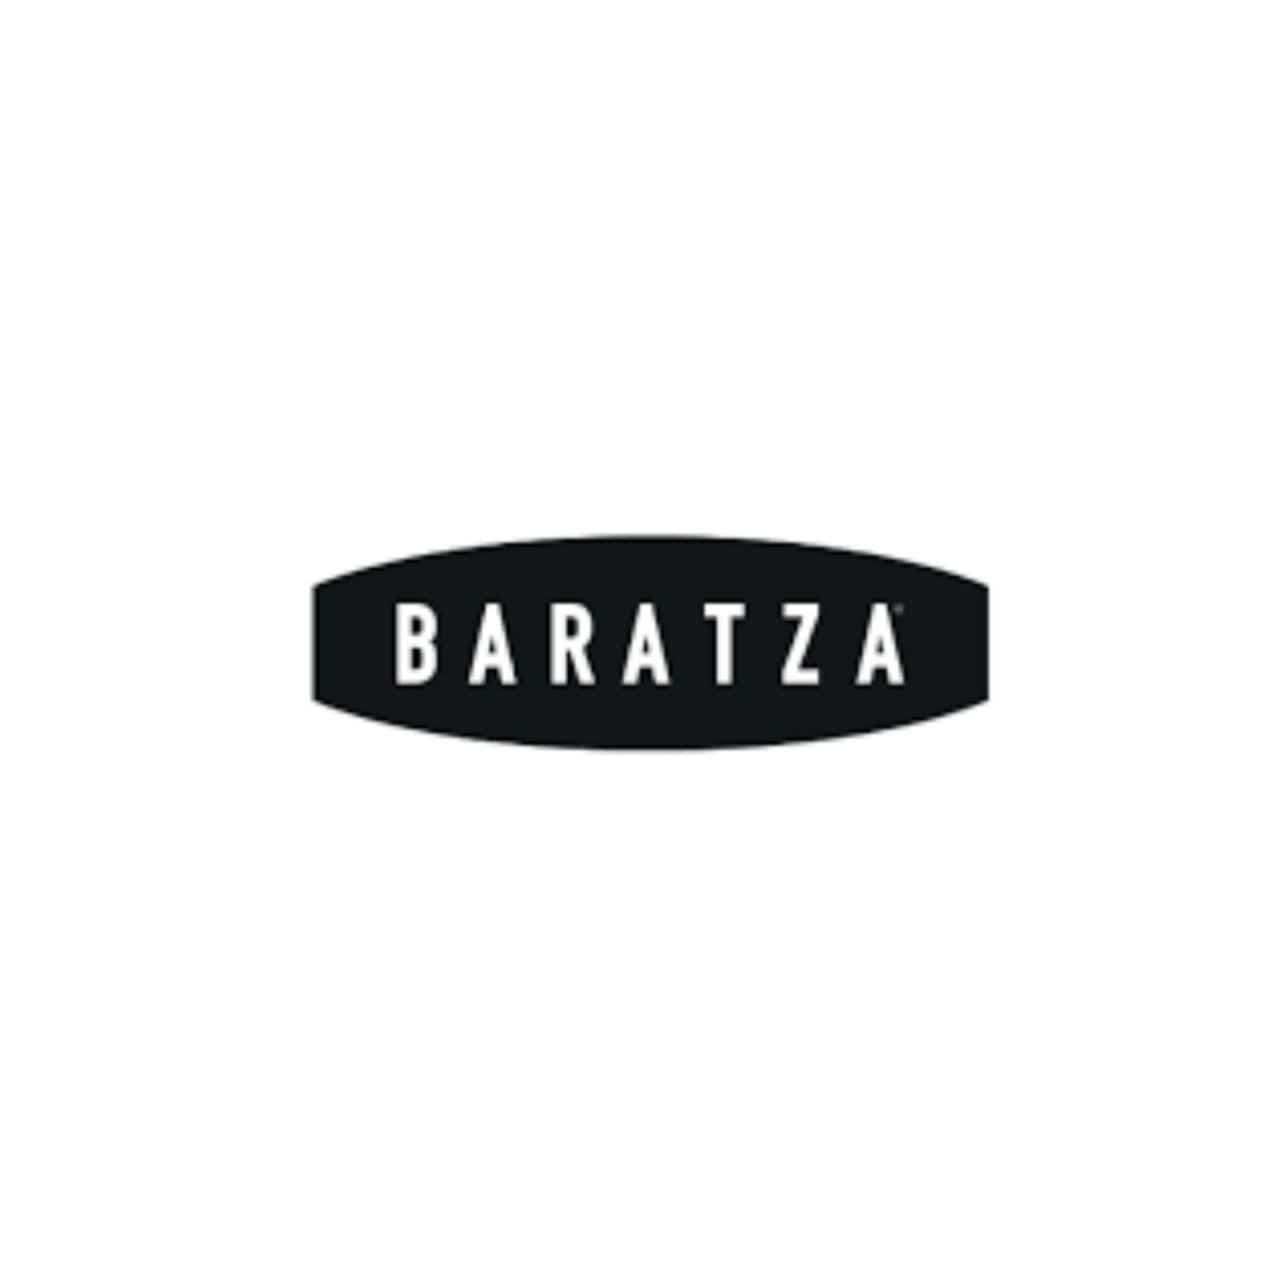 باراتزا